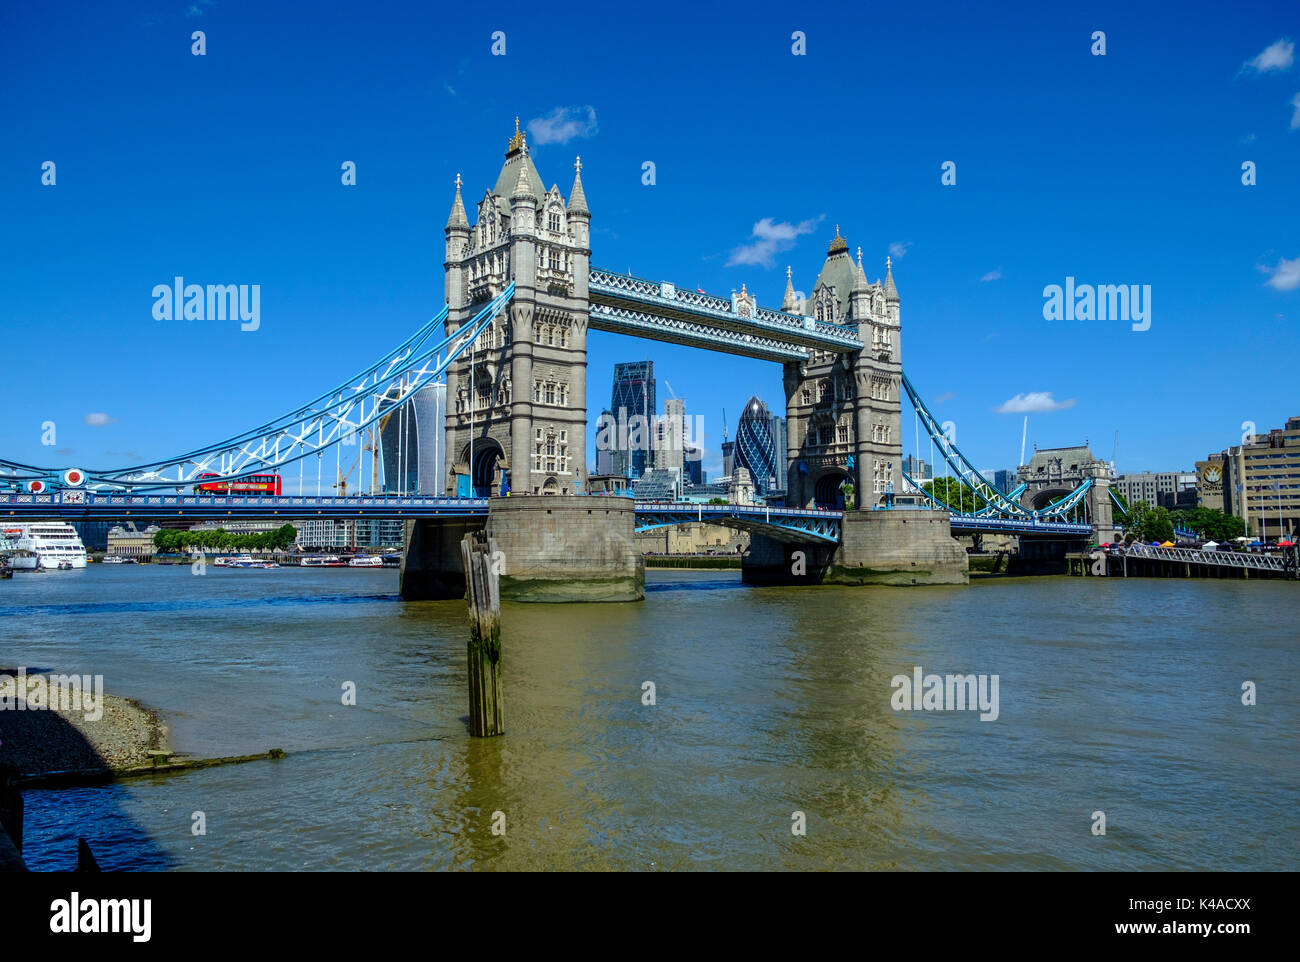 London Tower Bridge Stock Photo